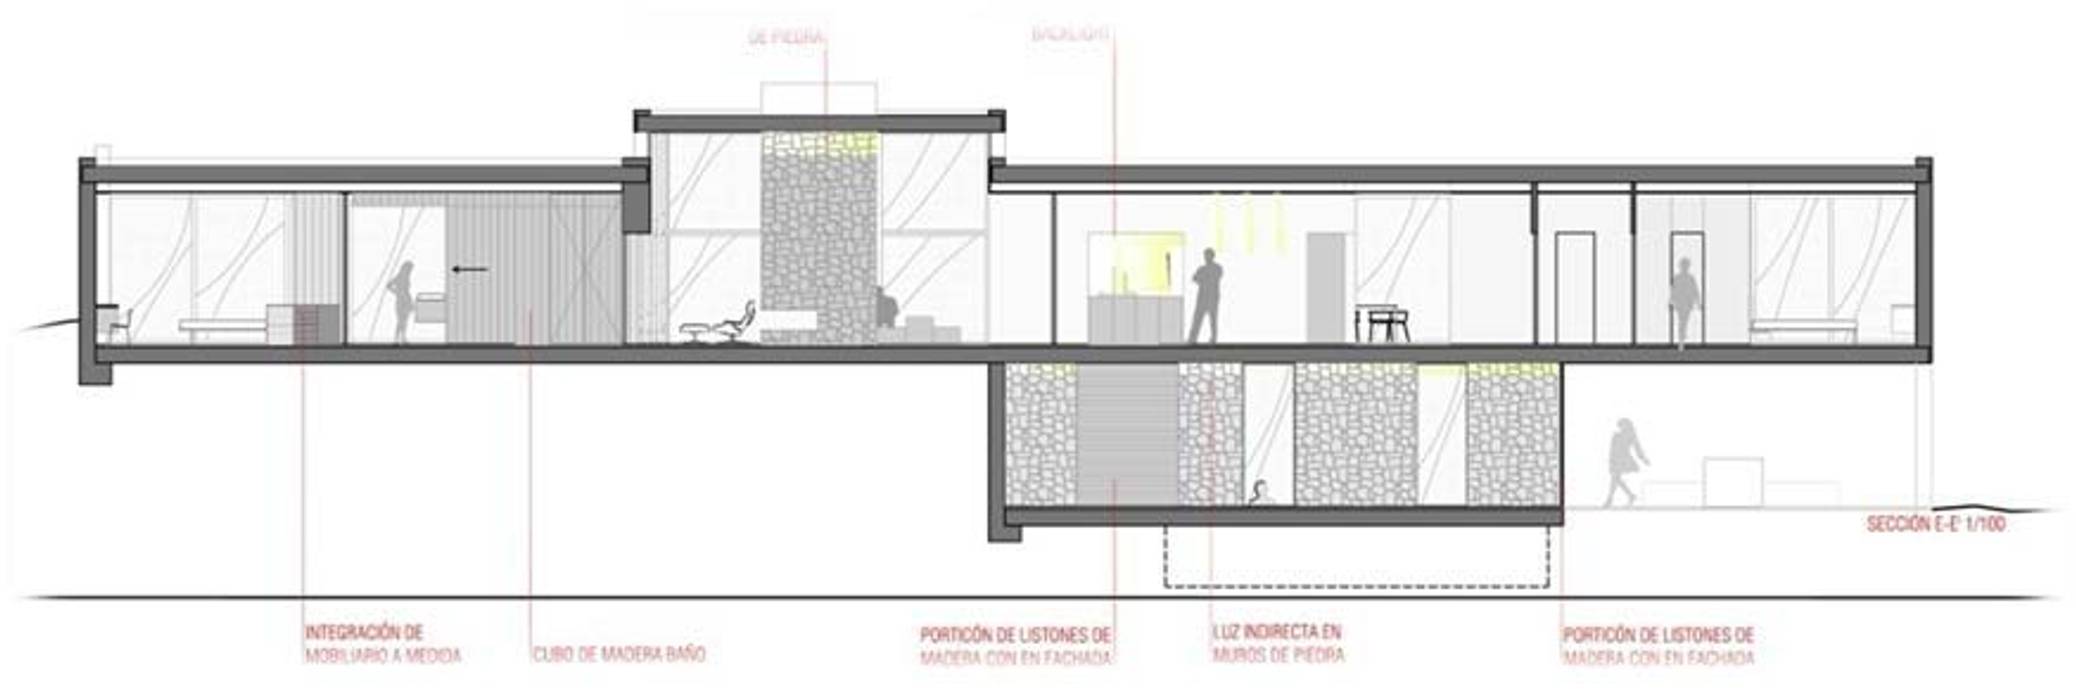 Seccion 3 Studioapart Interior & Product design Barcelona Baños turcos section